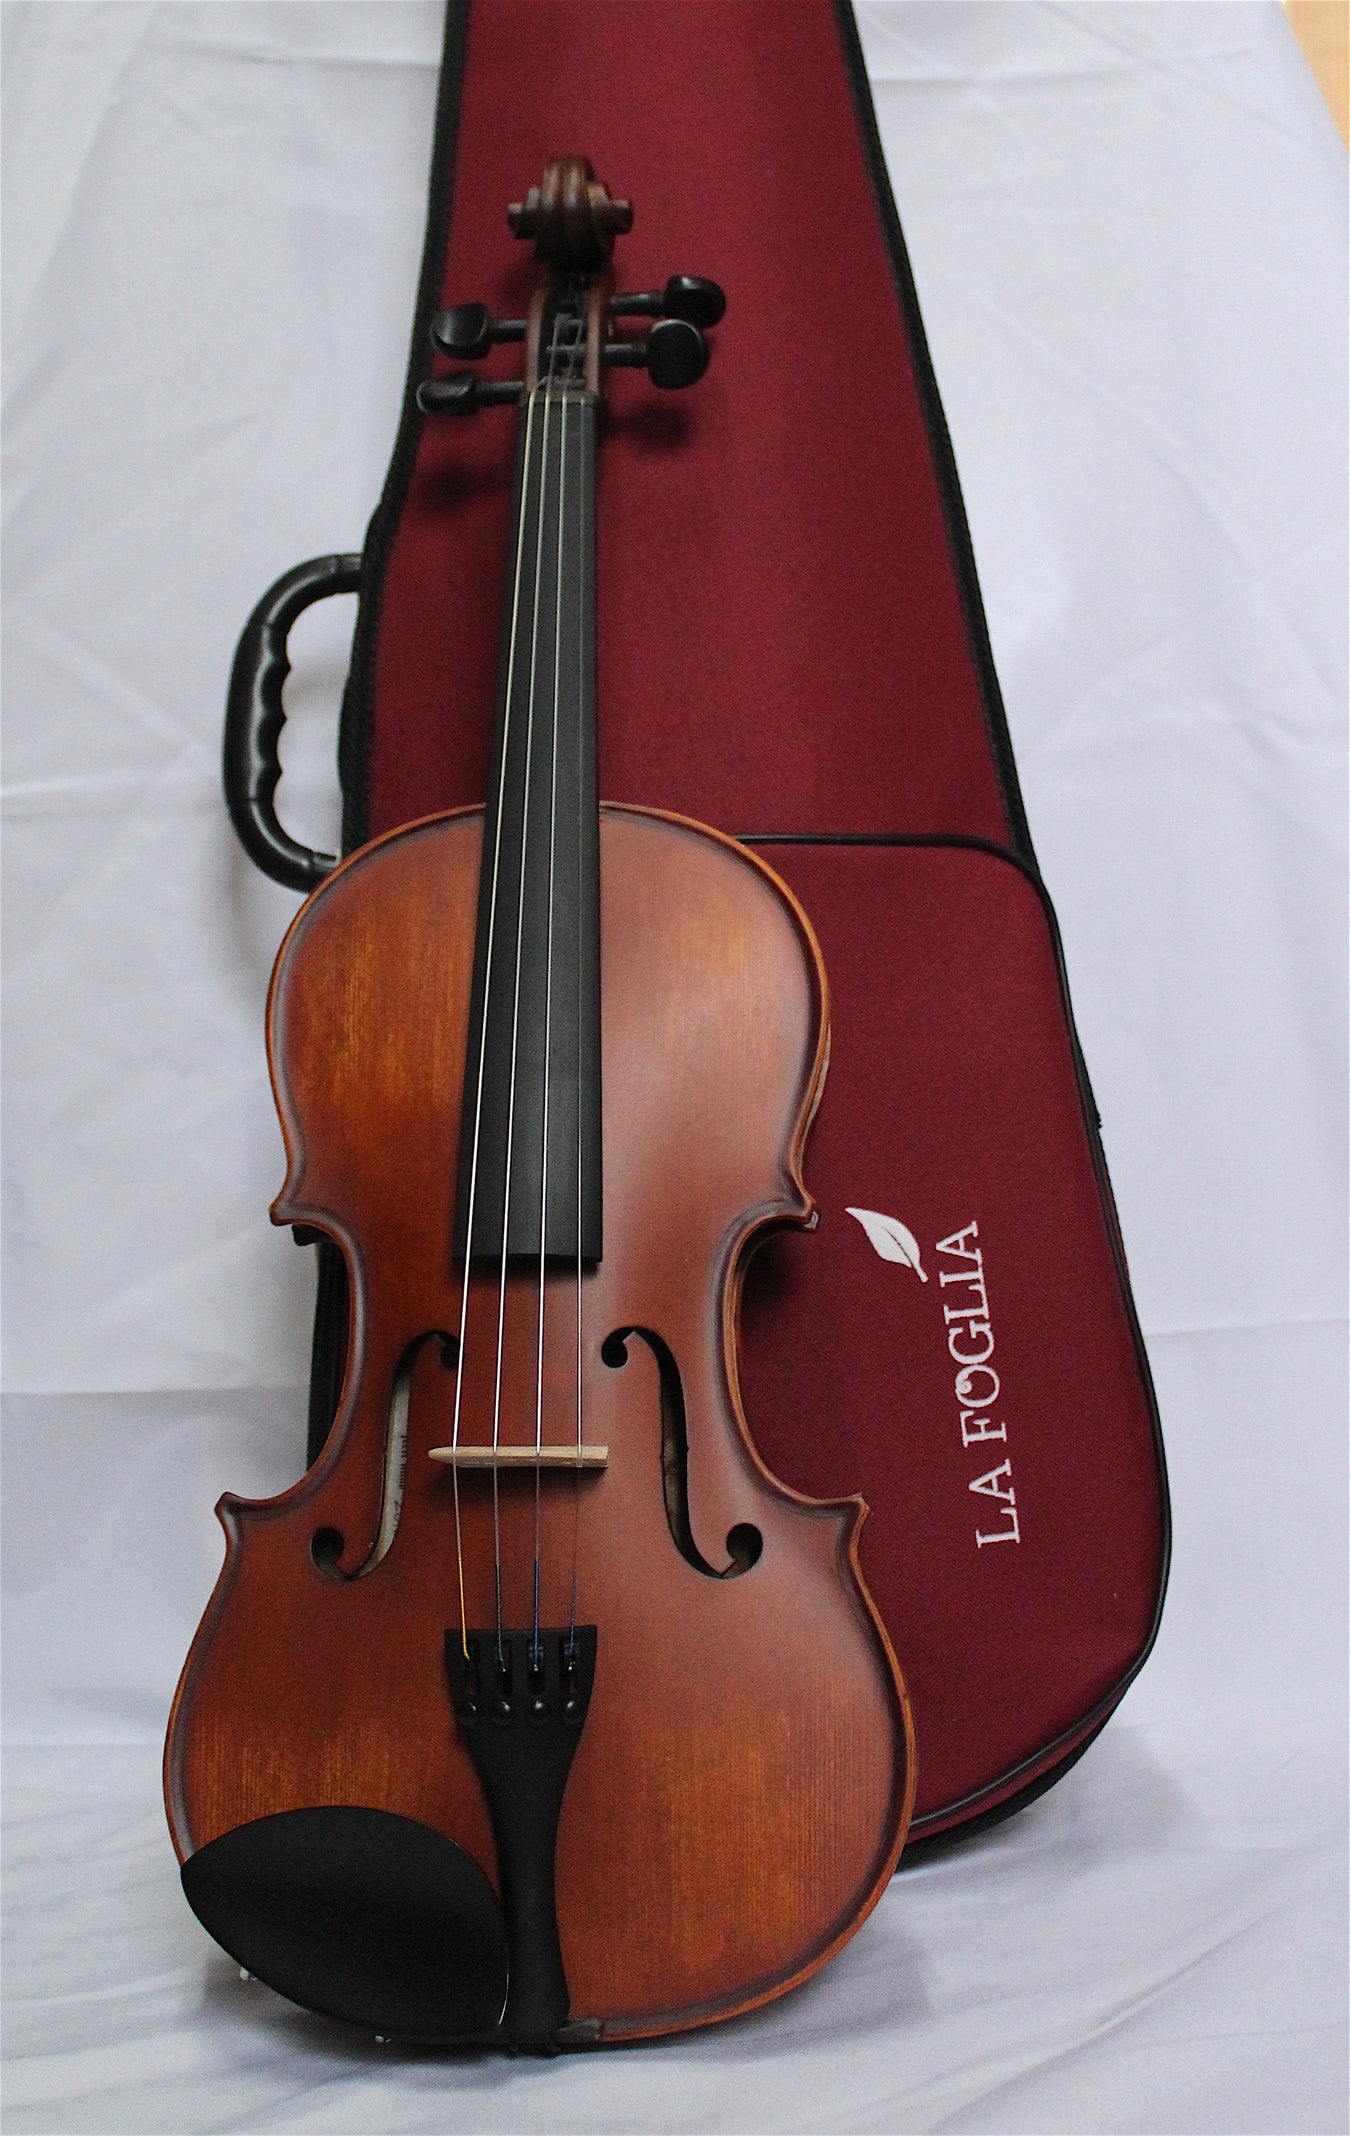 La Foglia Strings Violins